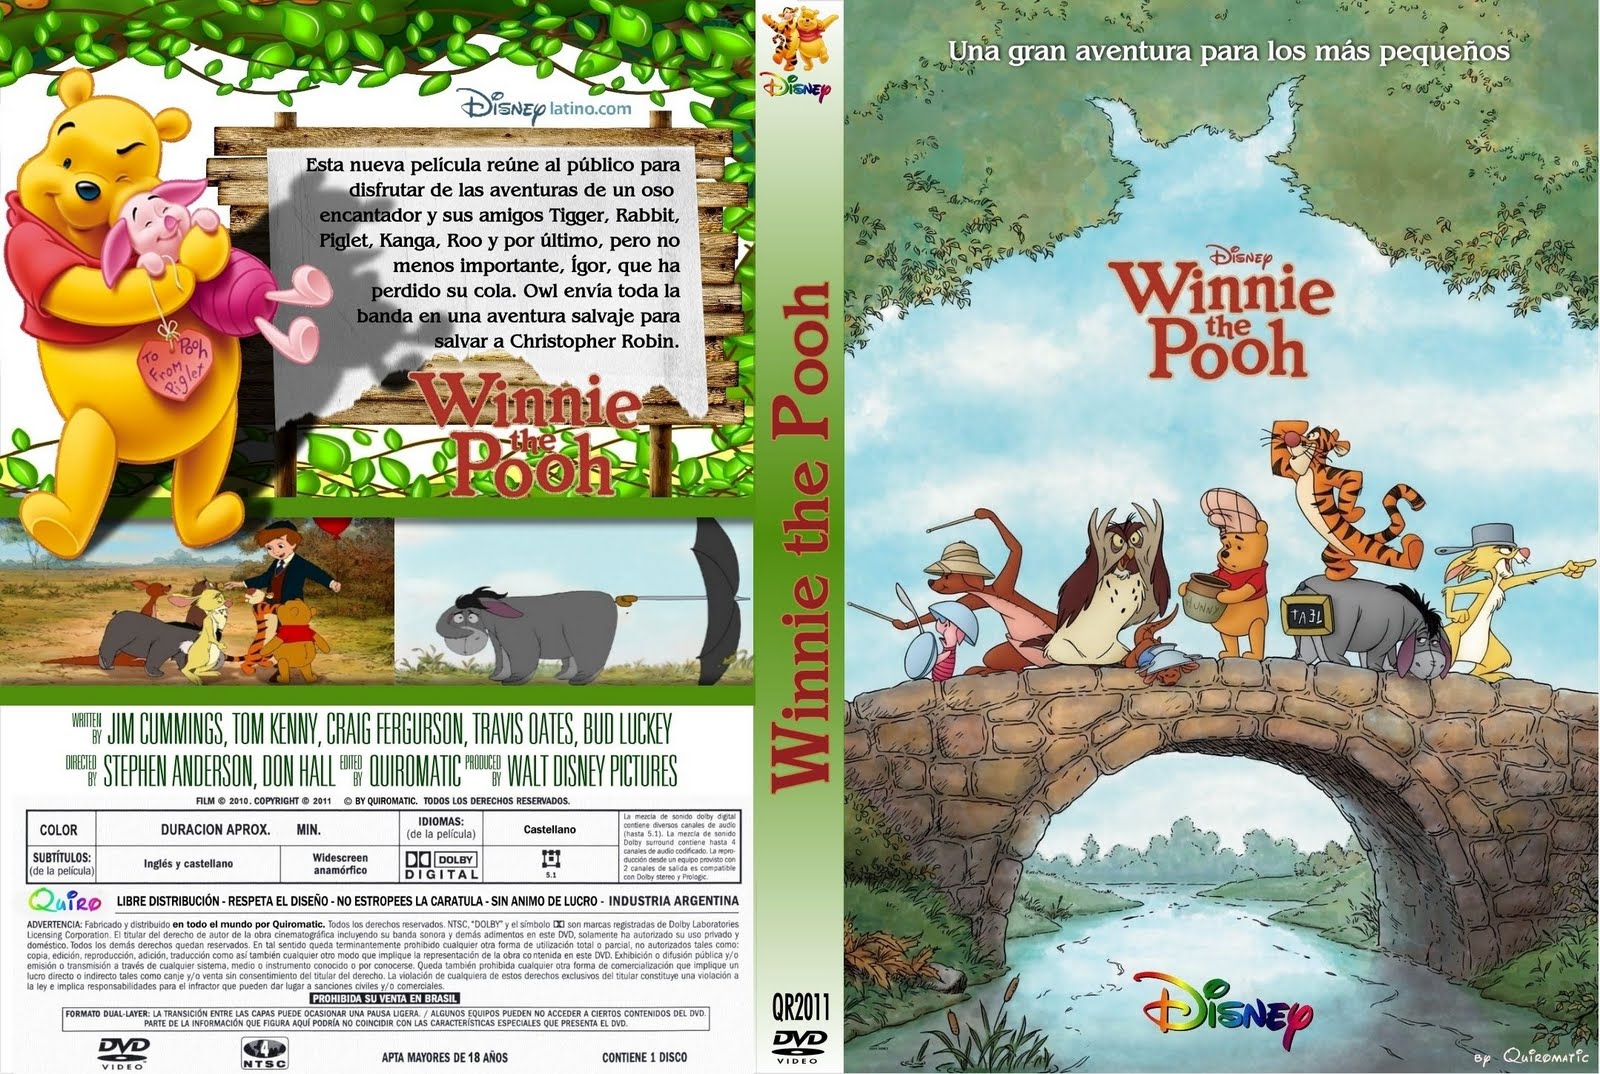 Winnie the Pooh [HDRip] [Castellano] [Animación] [2011] Winnie+The+Pooh+2011+Custom+Por+Quiromatic+-+dvd